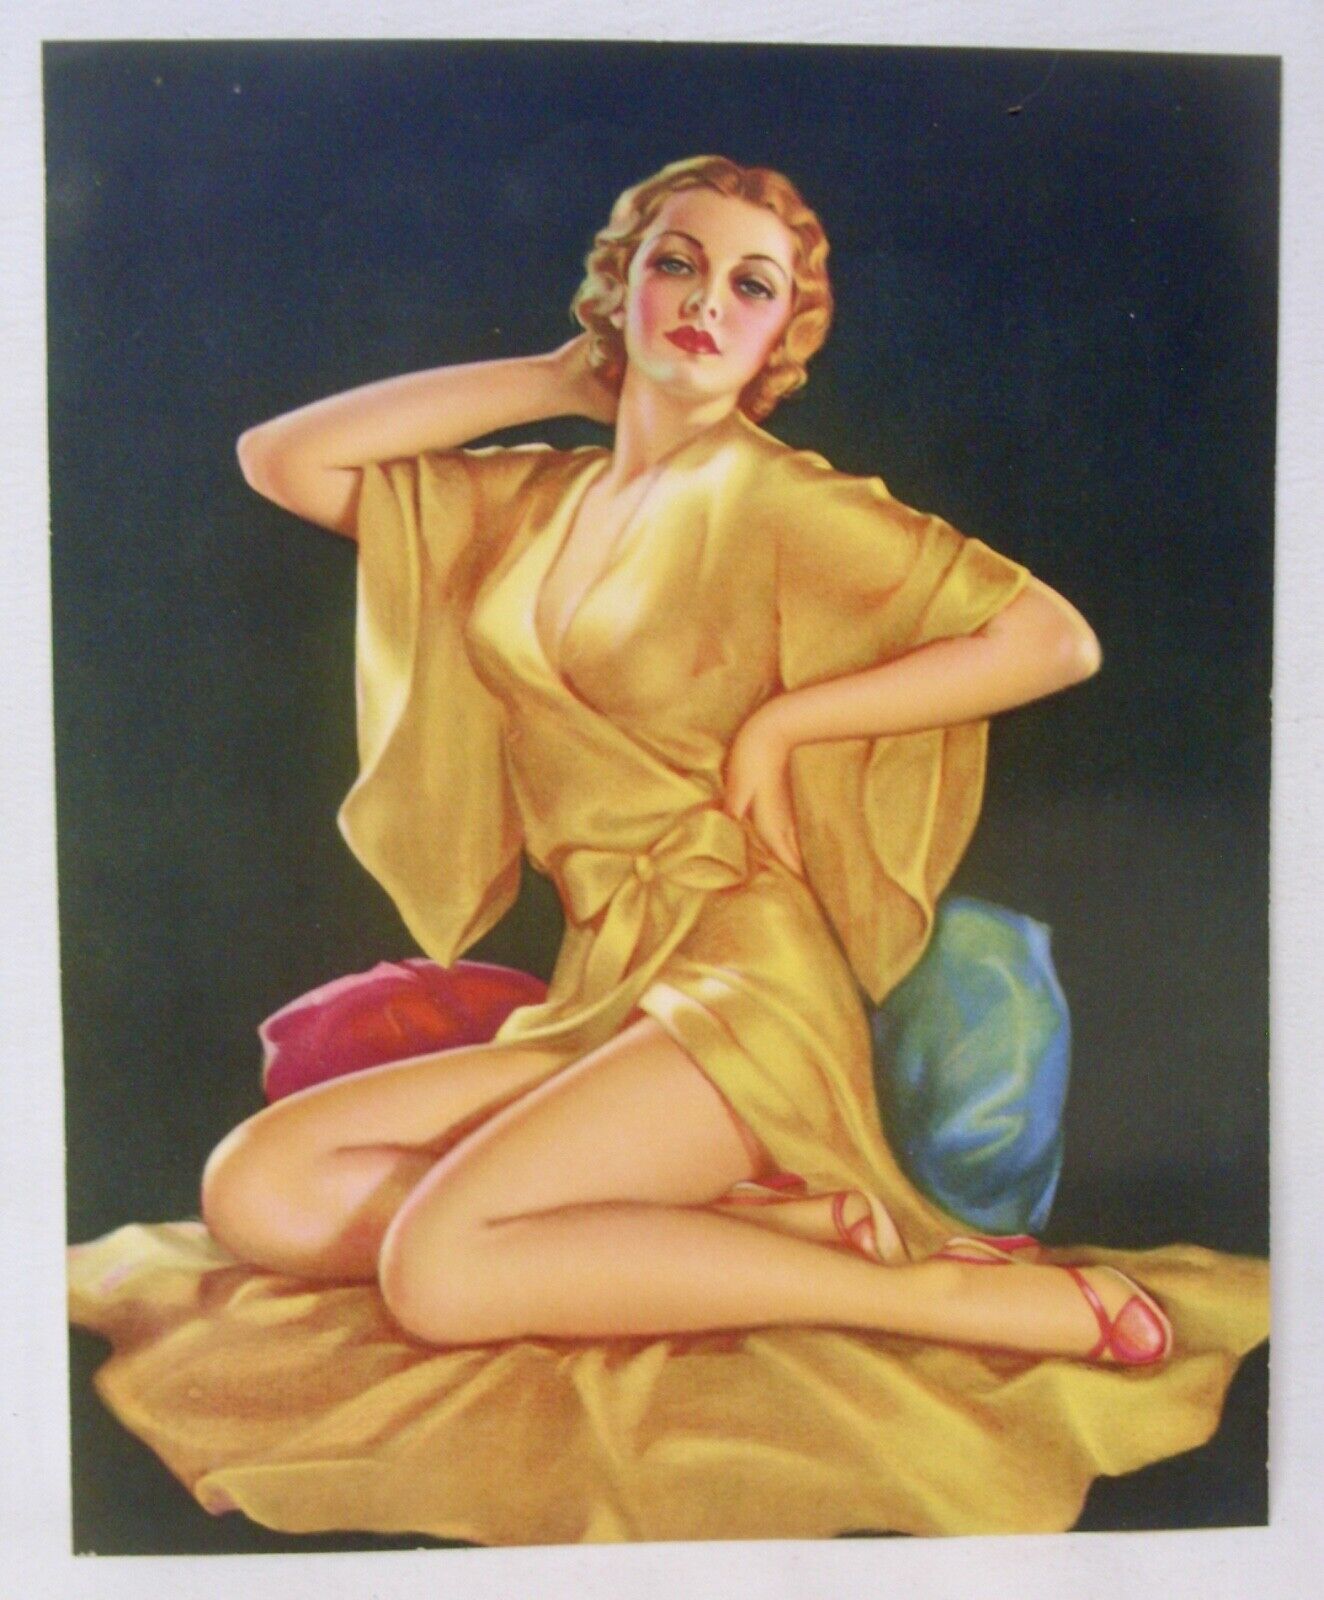 Vintage & Original PIN UP Art Deco Unidentified Artist & Title - EX